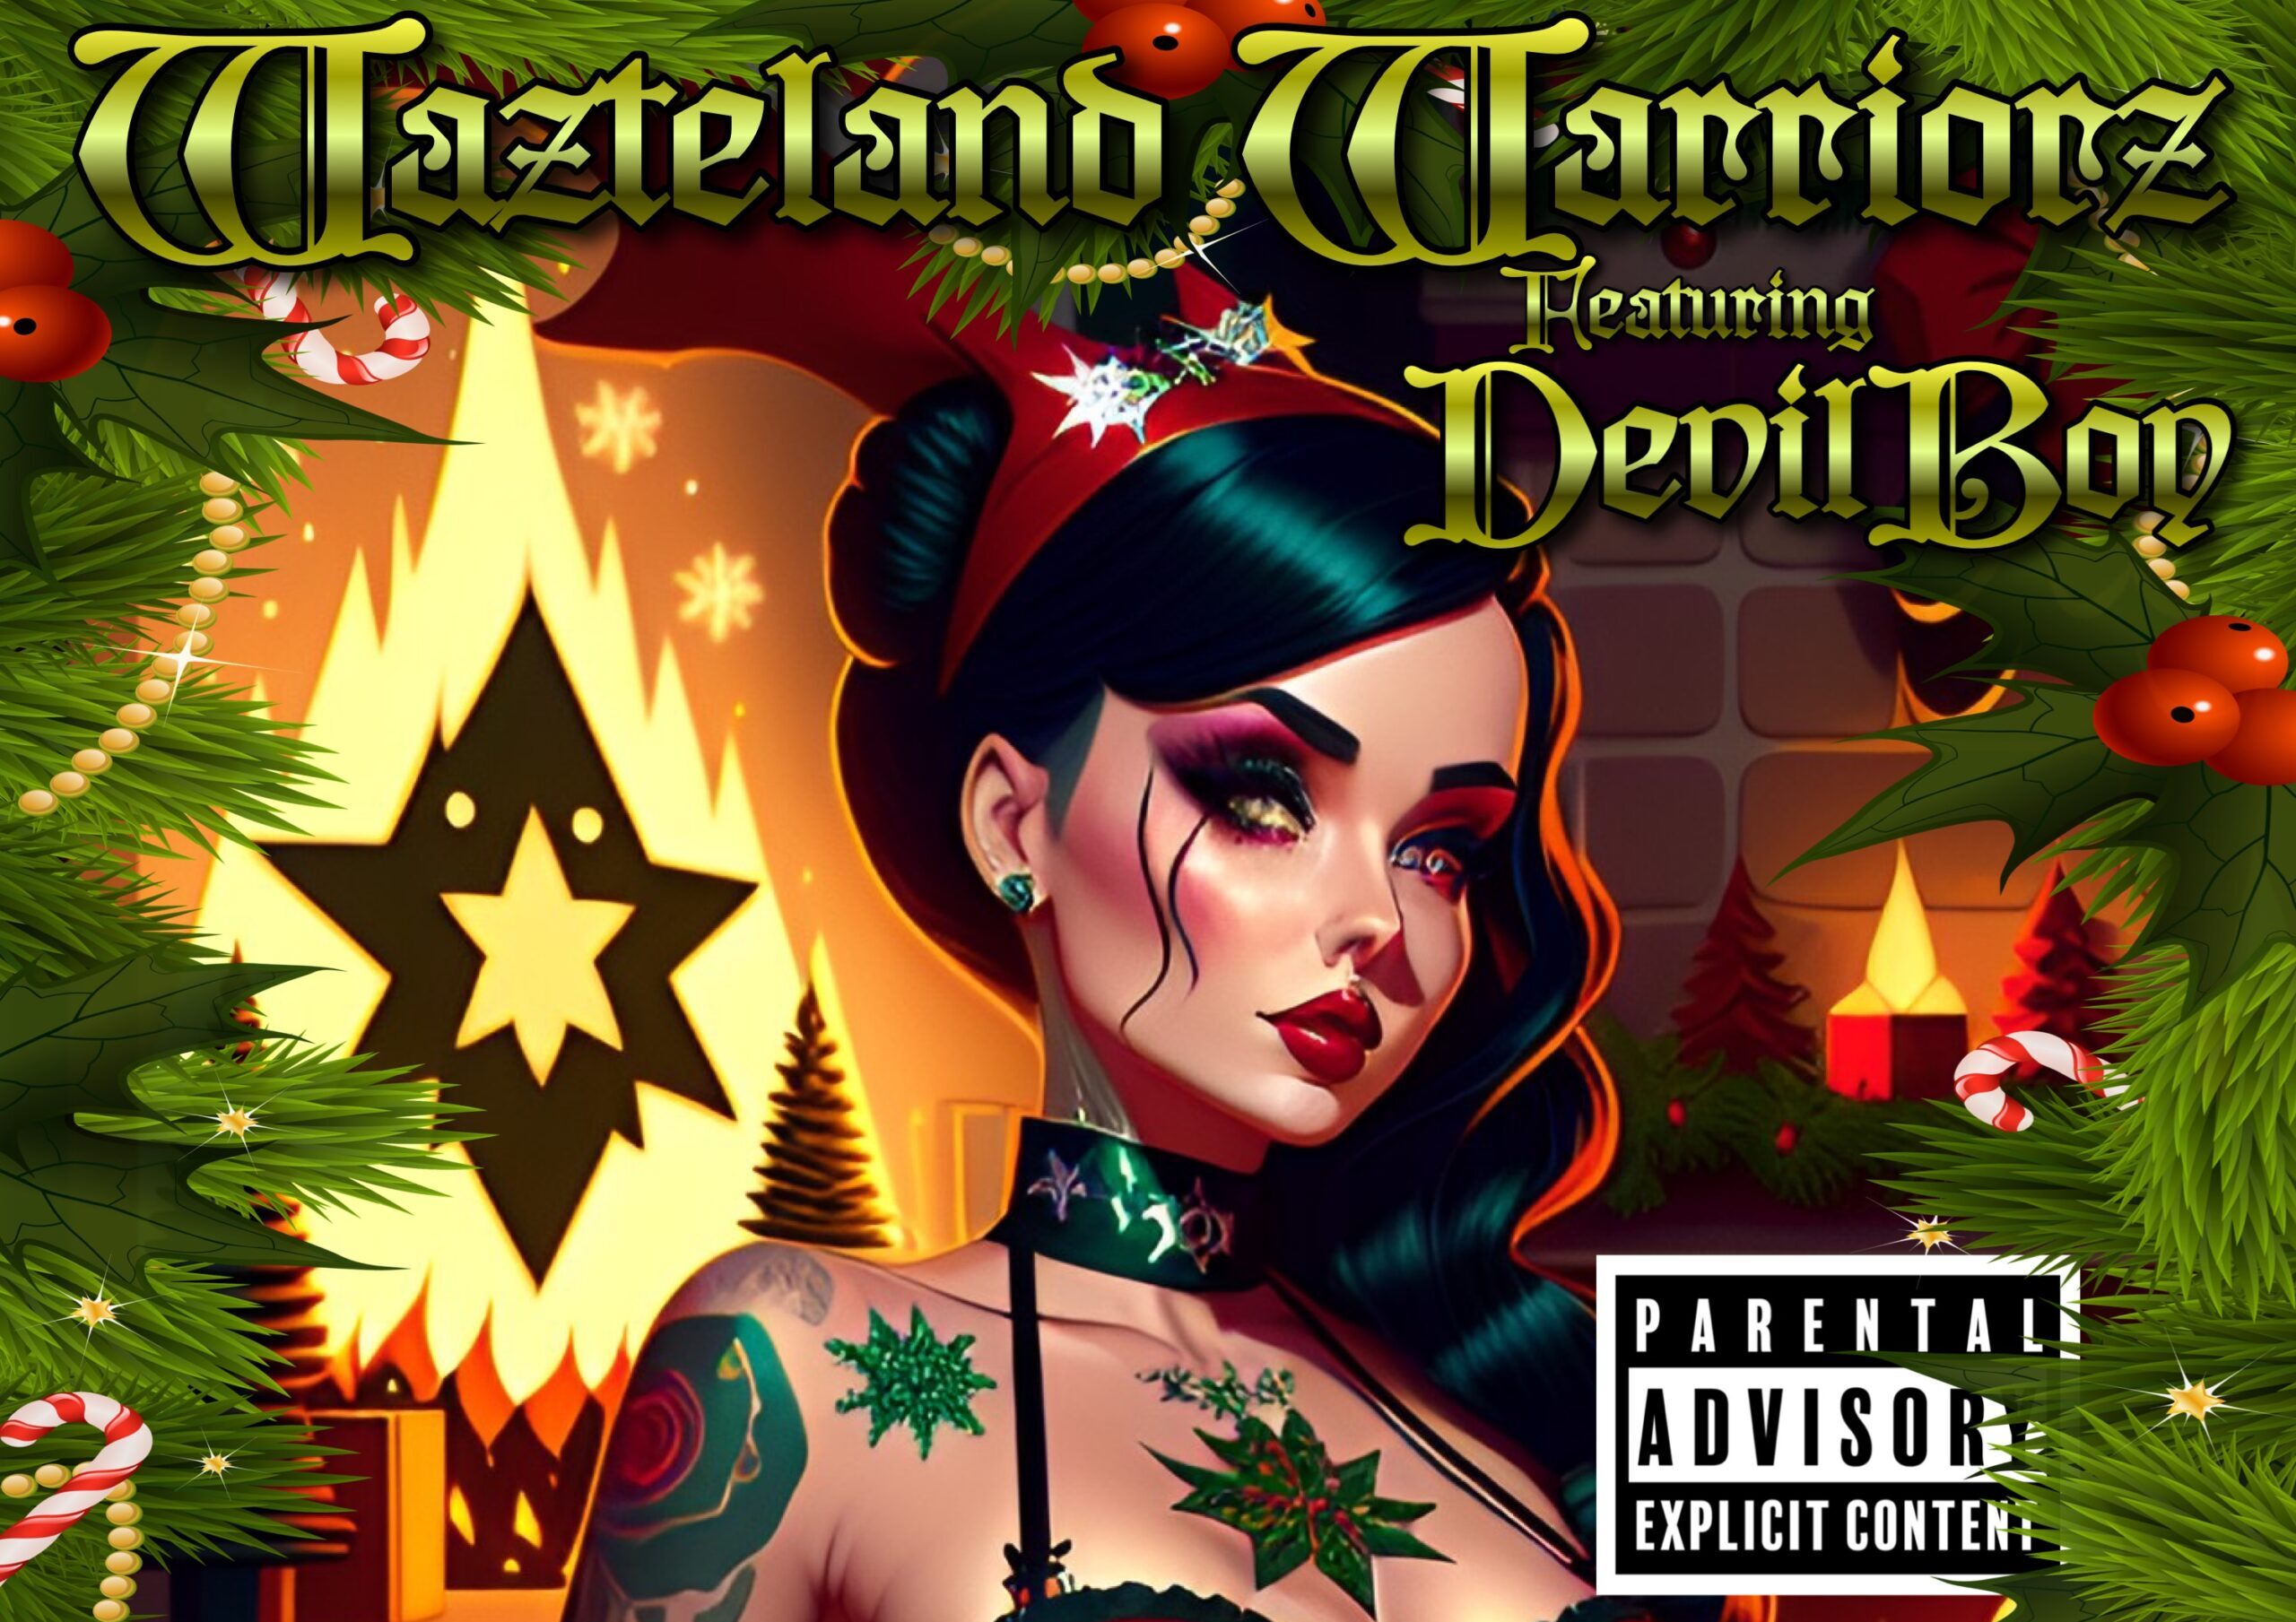 Post Apocalyptic Pop Media Unveils Festive Anthem "Miss Candy Cane" by Wazteland Warriorz ft. DevilBoy